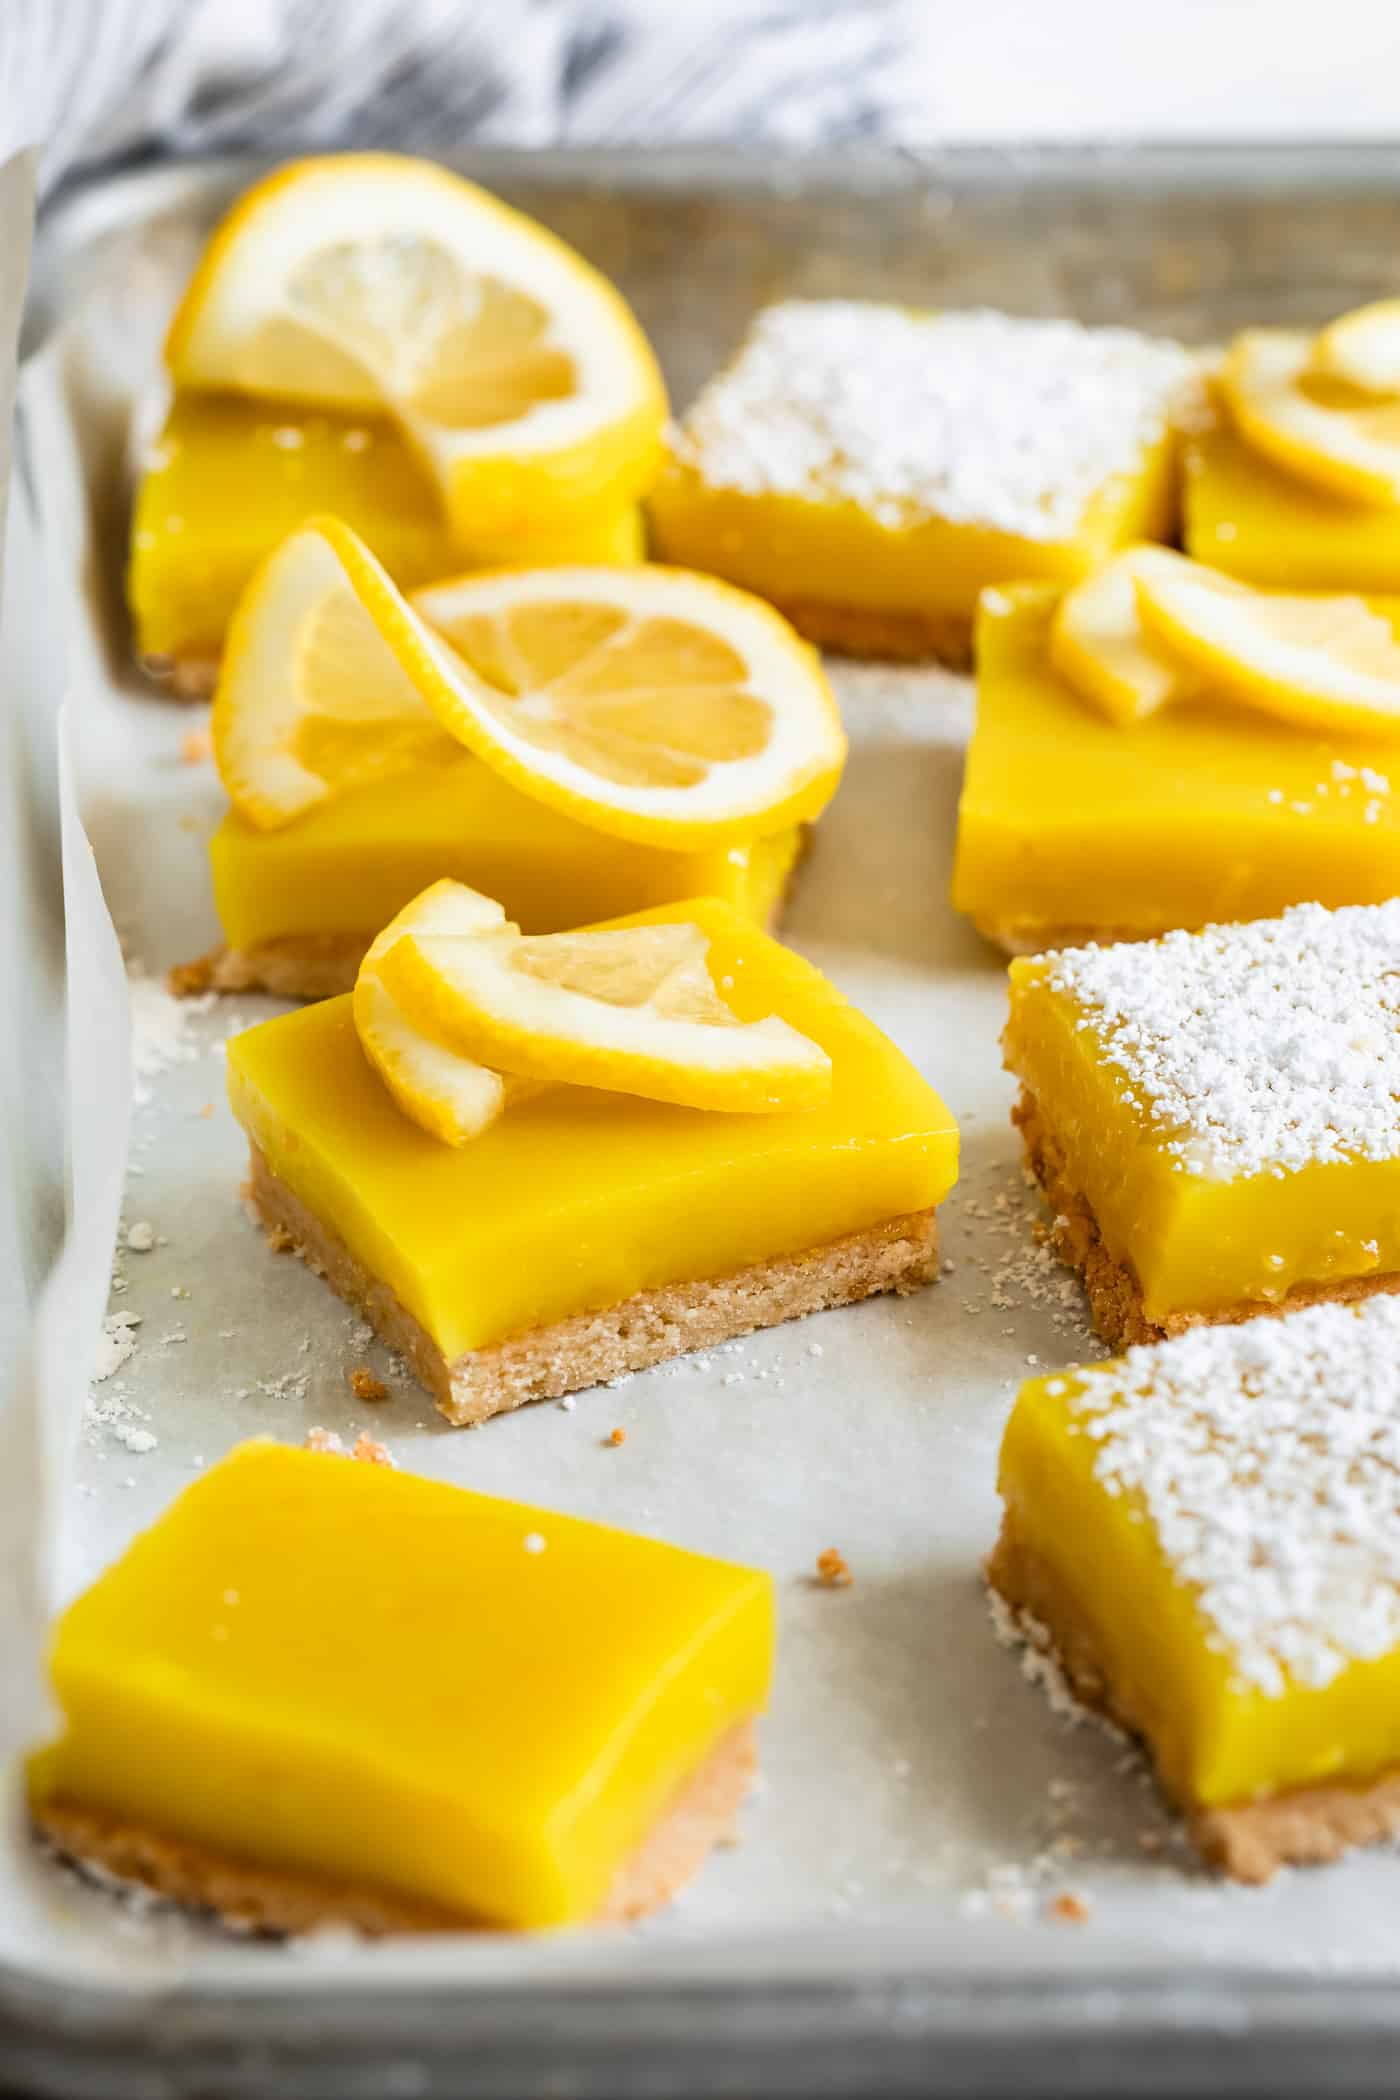 Vegan Gluten-Free Lemon Bars with Almond Flour